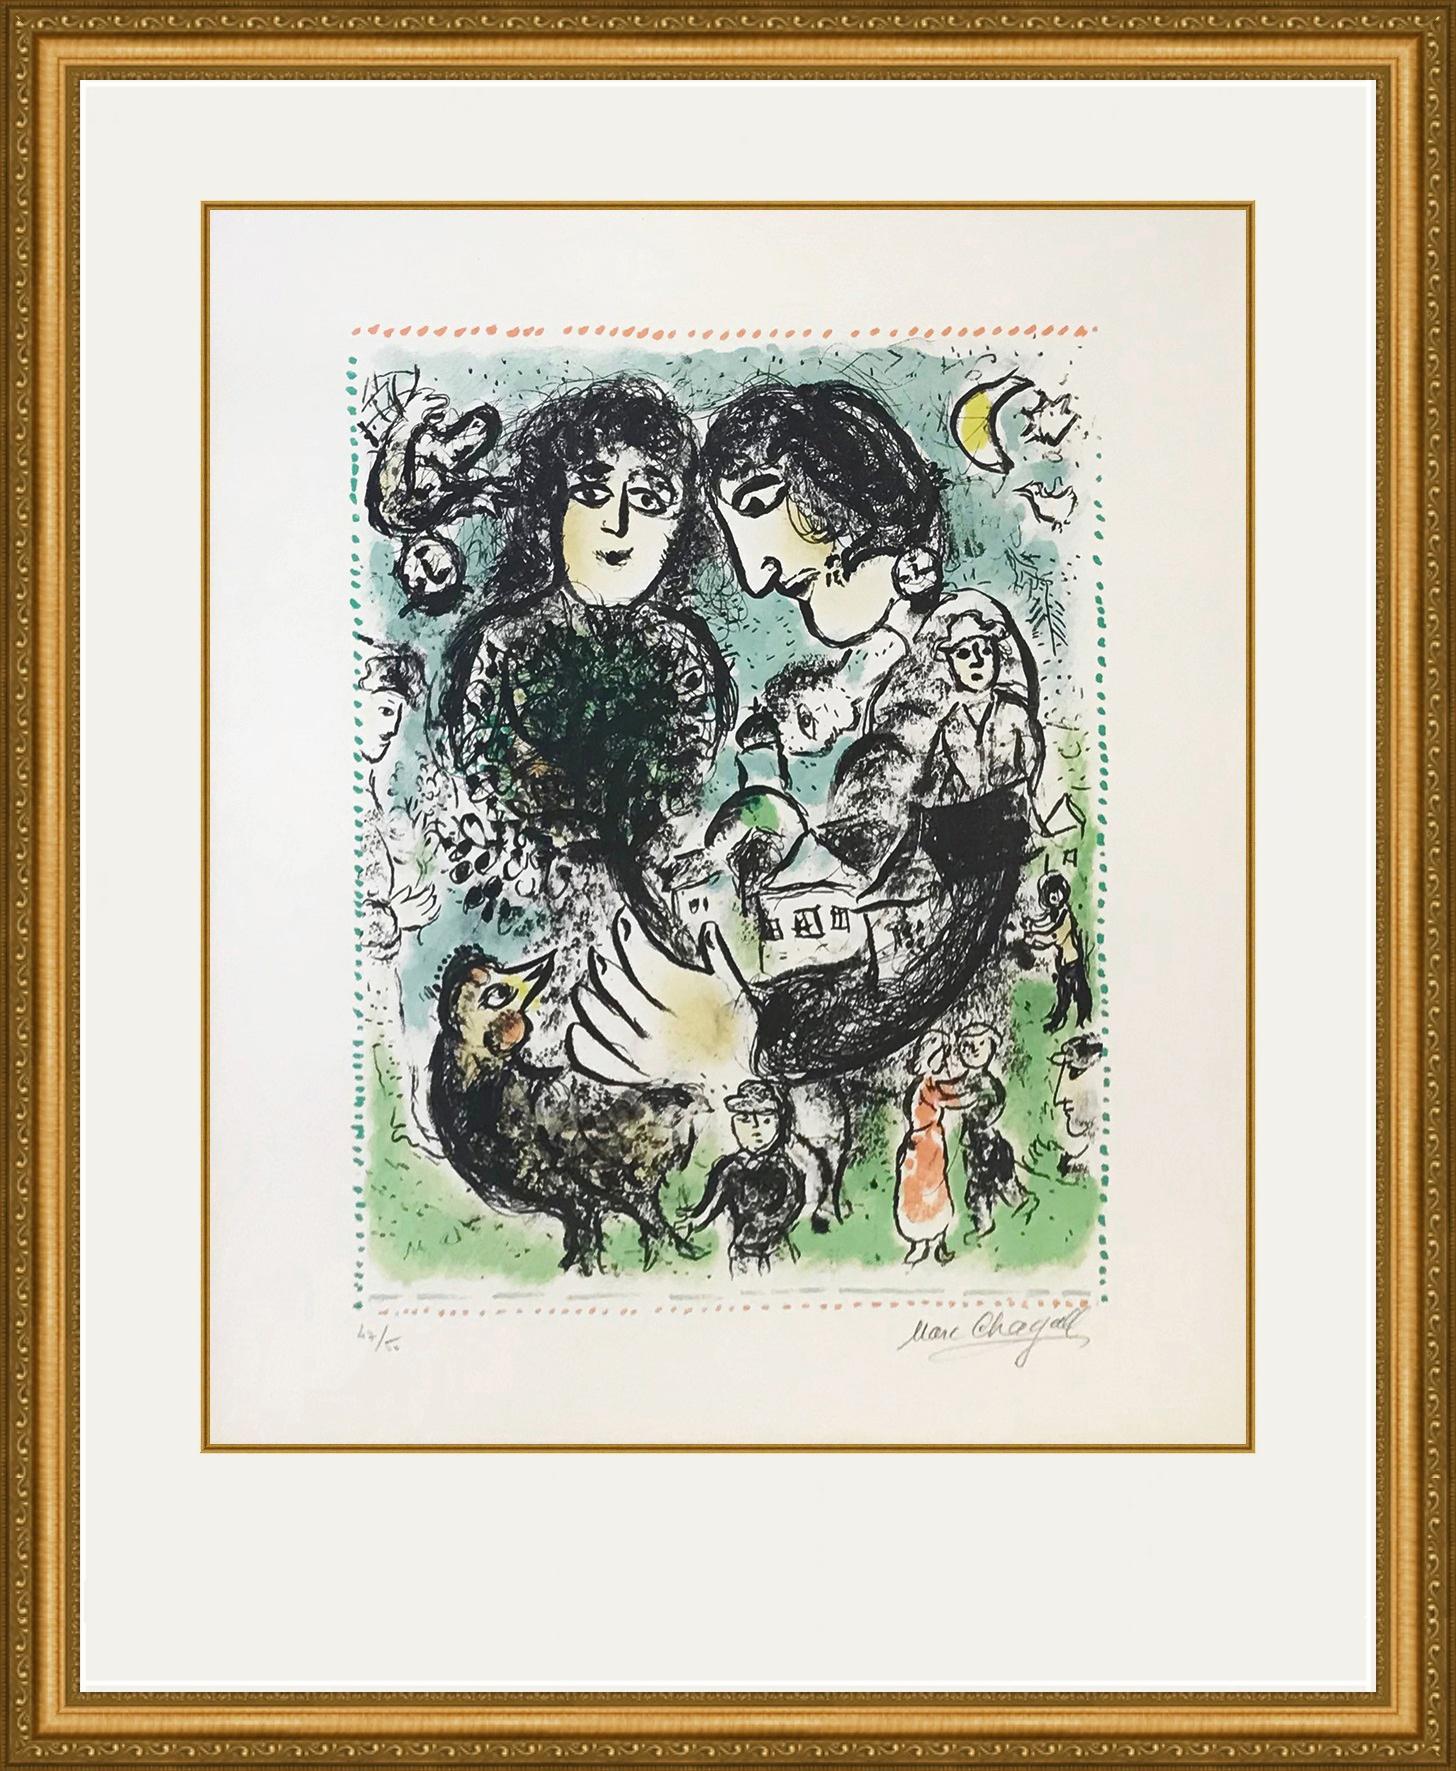 LE RENDEZ-VOUS - Print by Marc Chagall